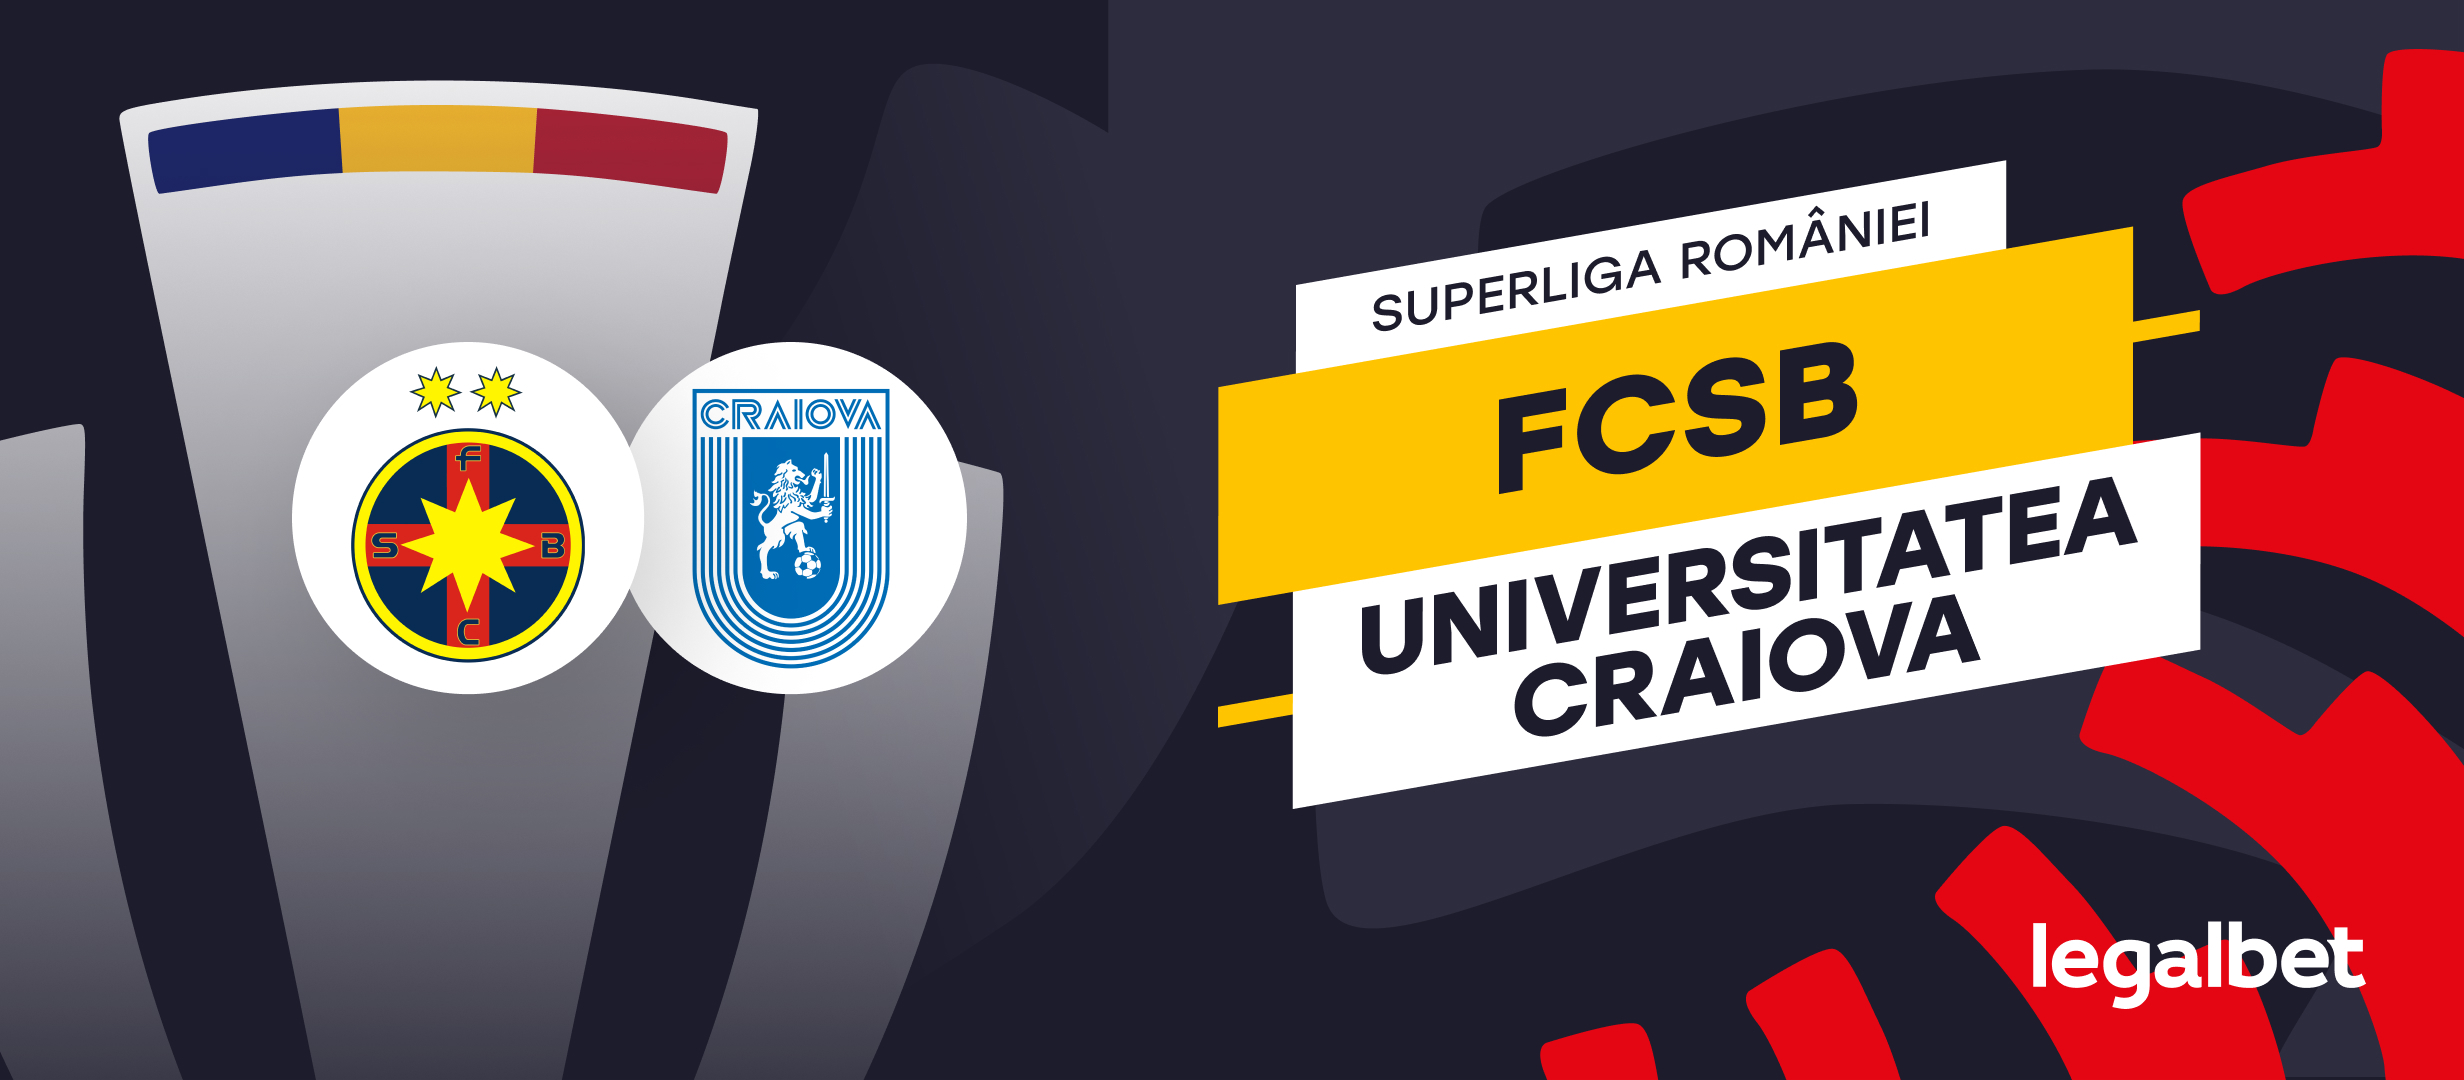 FCSB - Universitatea Craiova: Ponturi şi cote la pariuri